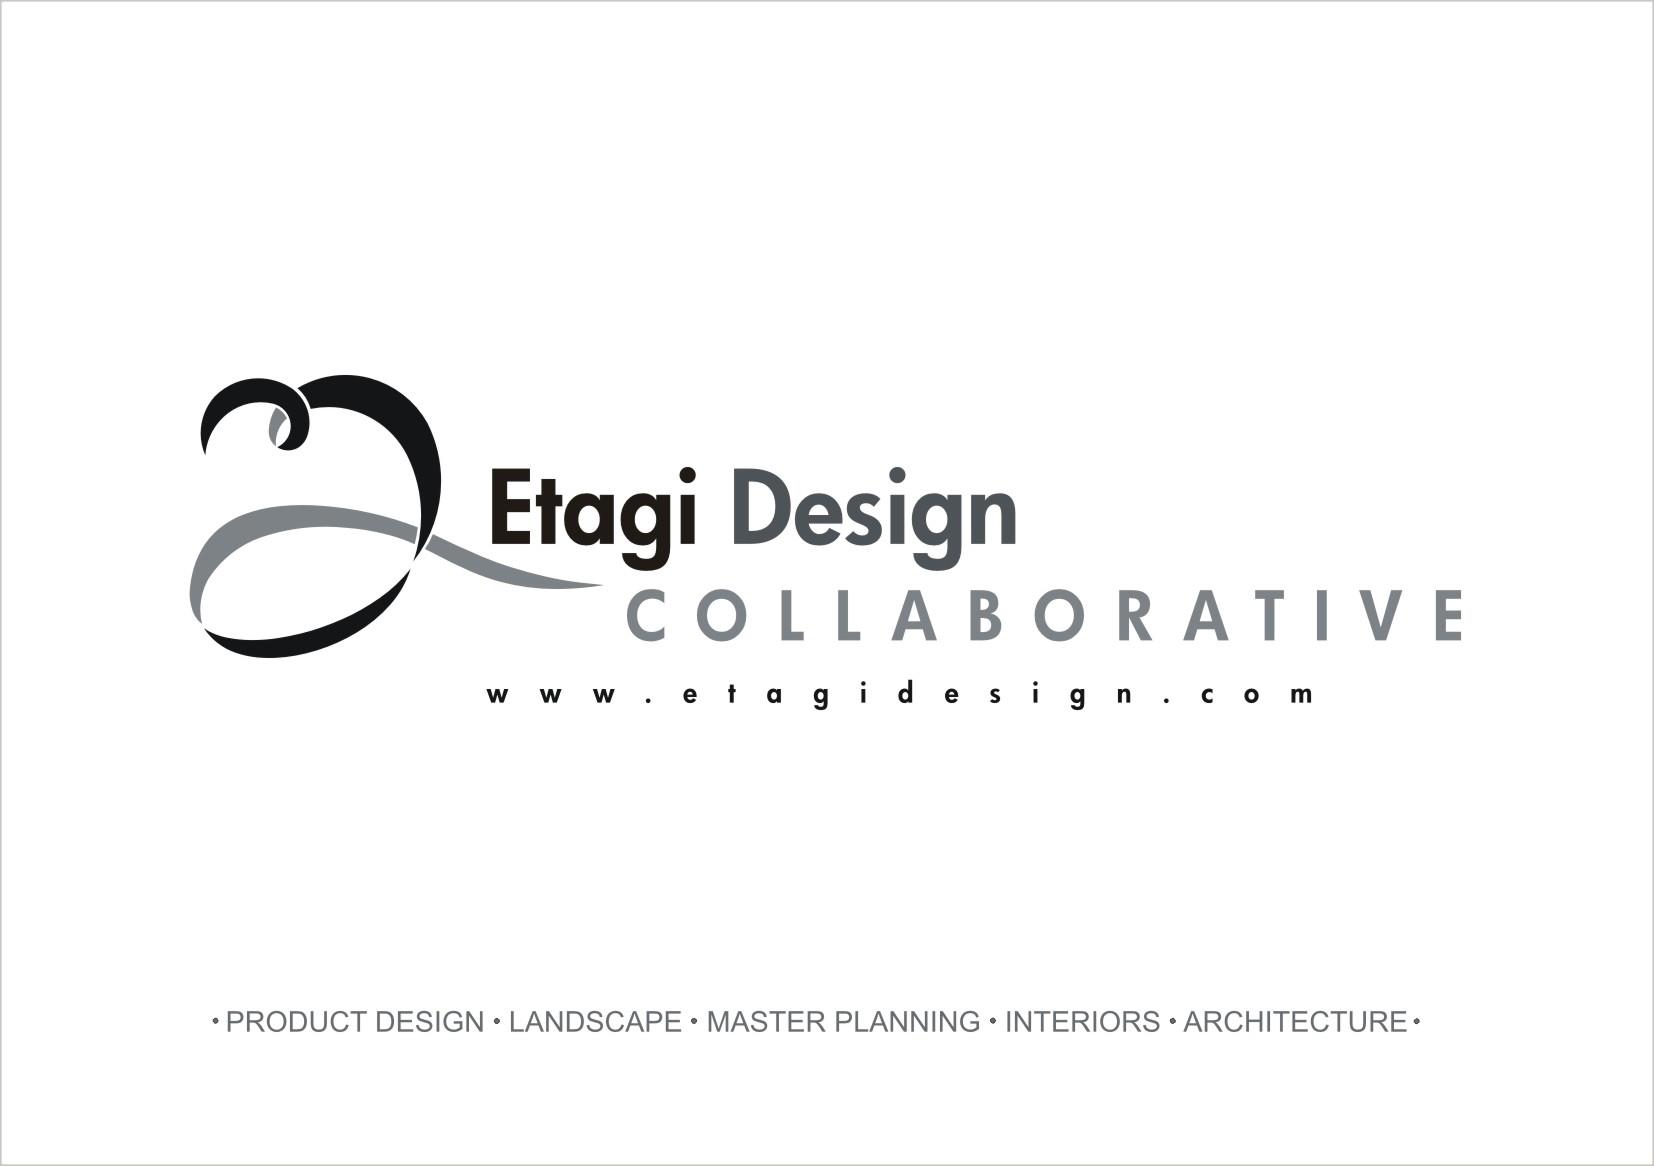 Etagi Design Collaborative|Accounting Services|Professional Services